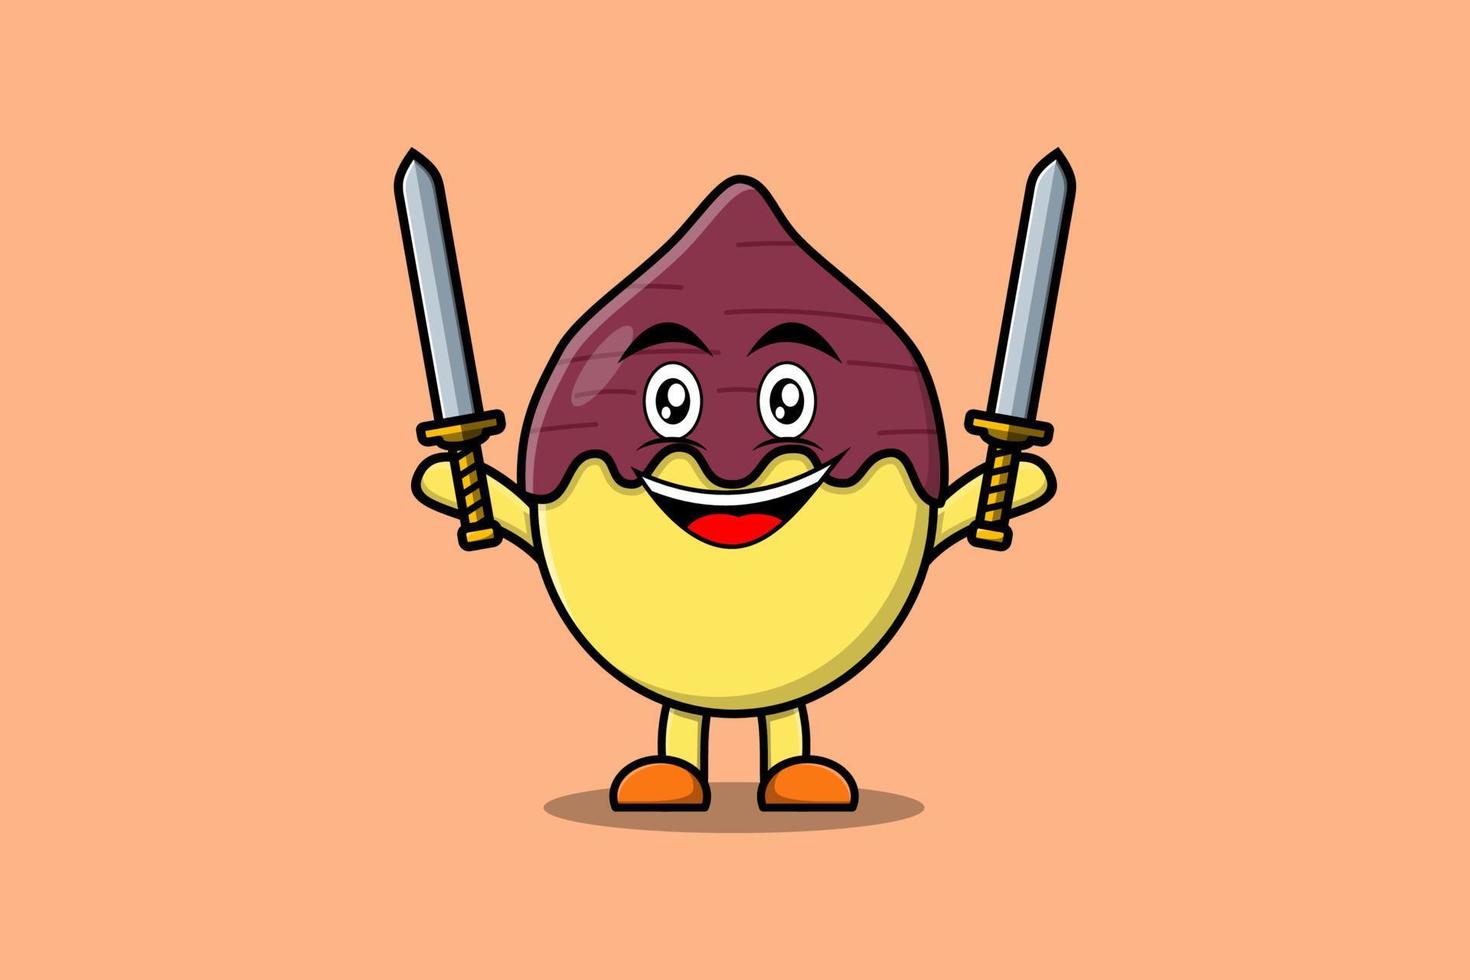 süßer Cartoon-Süßkartoffel-Charakter hält zwei Schwerter vektor